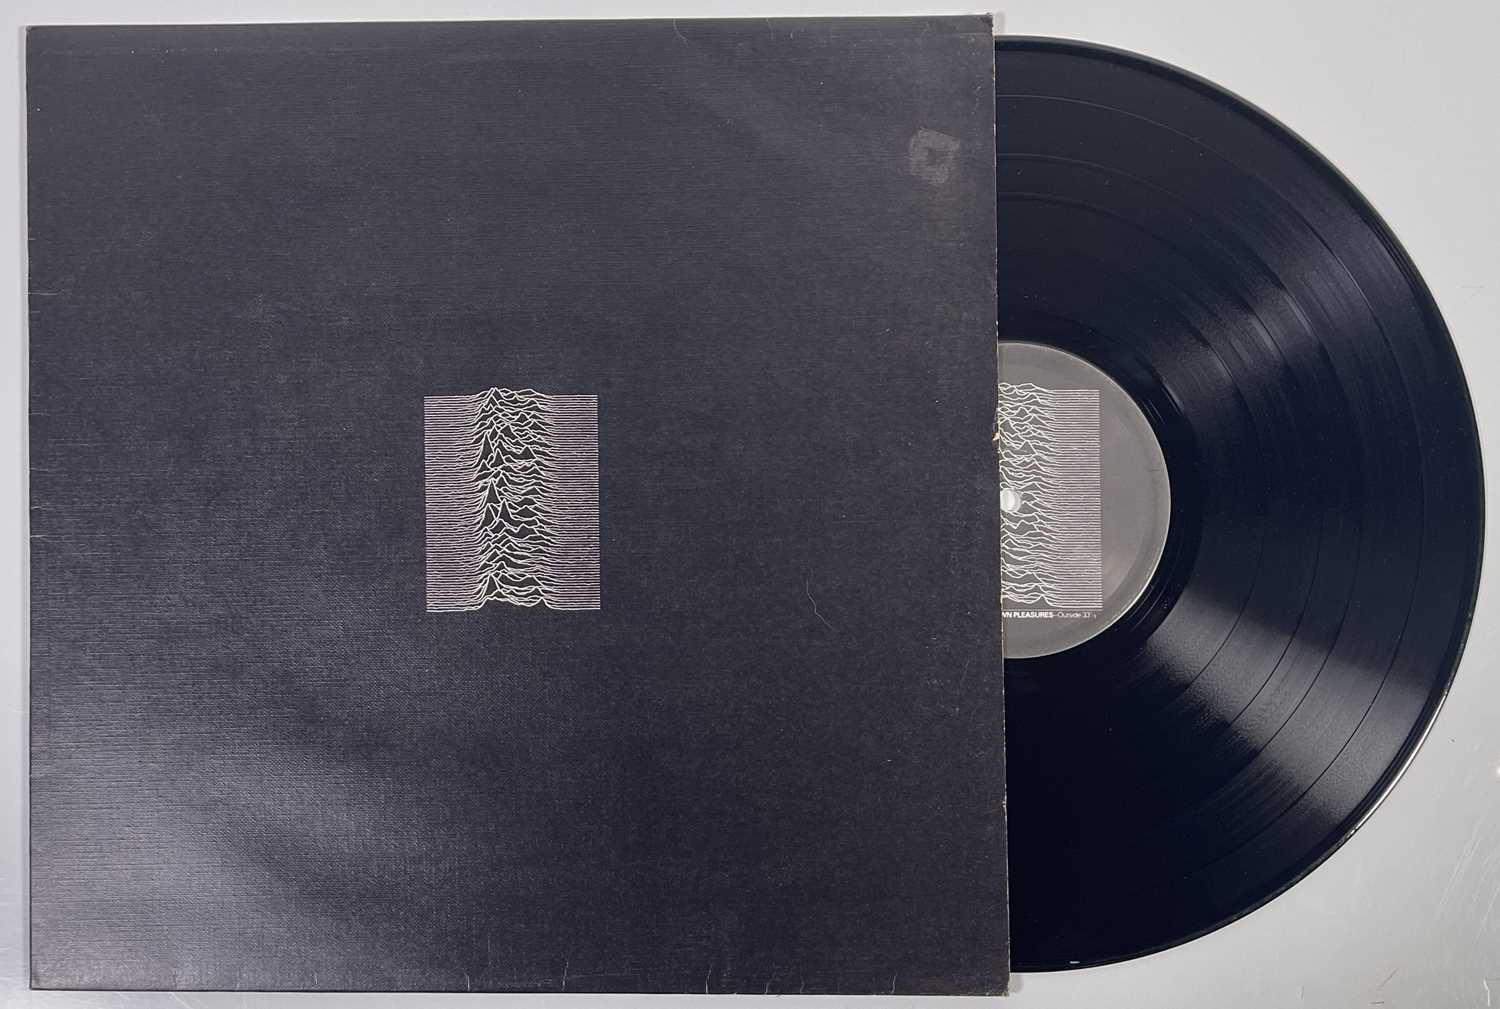 JOY DIVISION - UNKNOWN PLEASURES LP (ORIGINAL UK 'TRANSLUCENT RED' COPY - FACT 10).